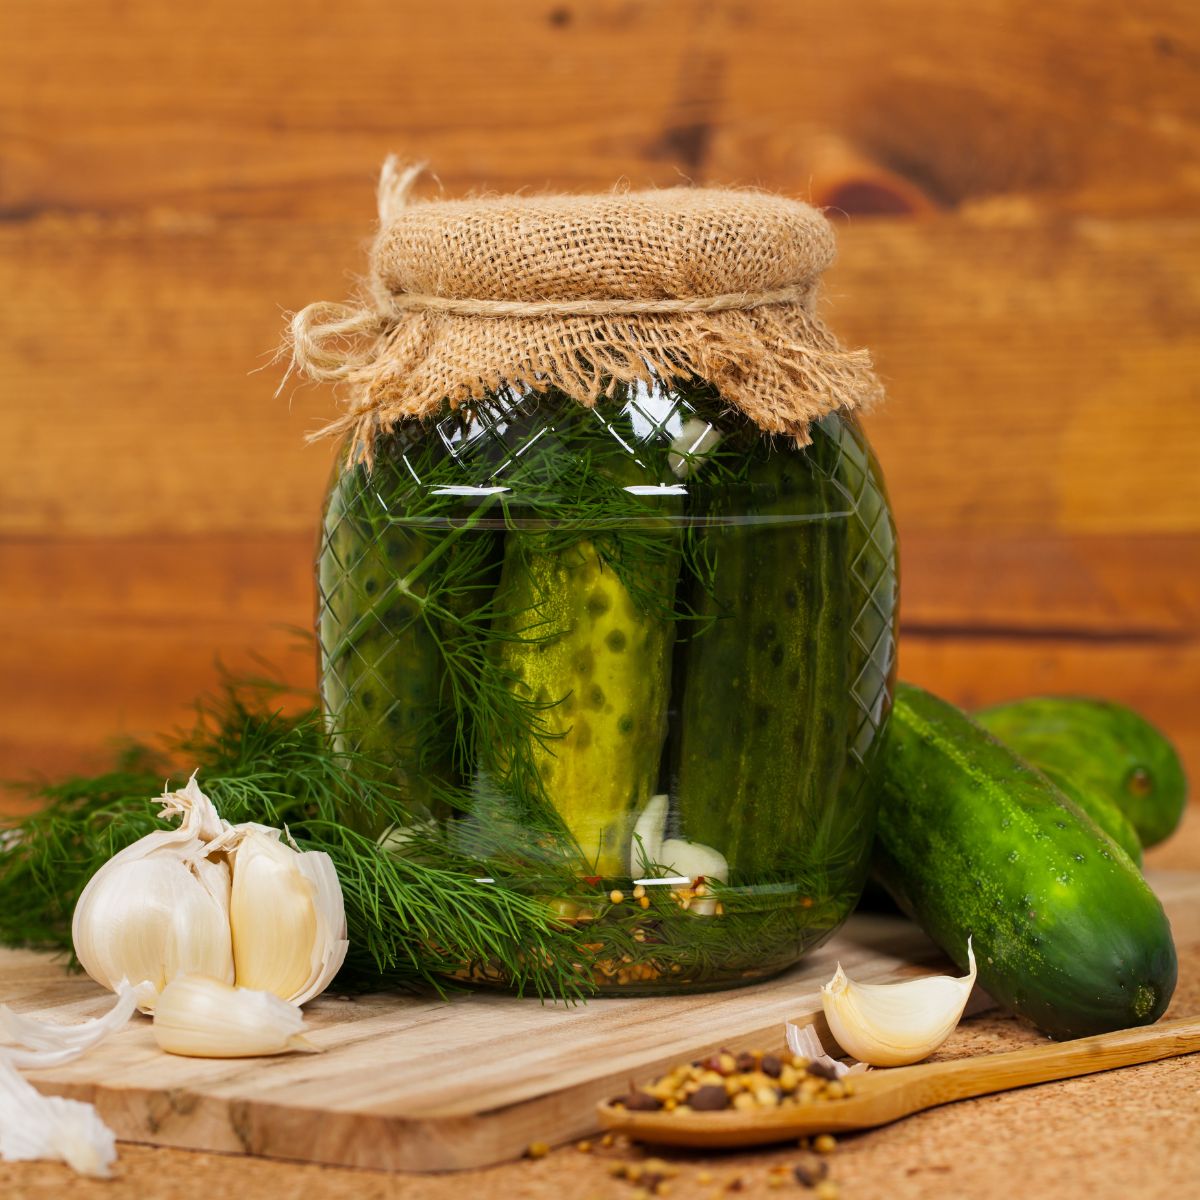 a jar of dill pickles